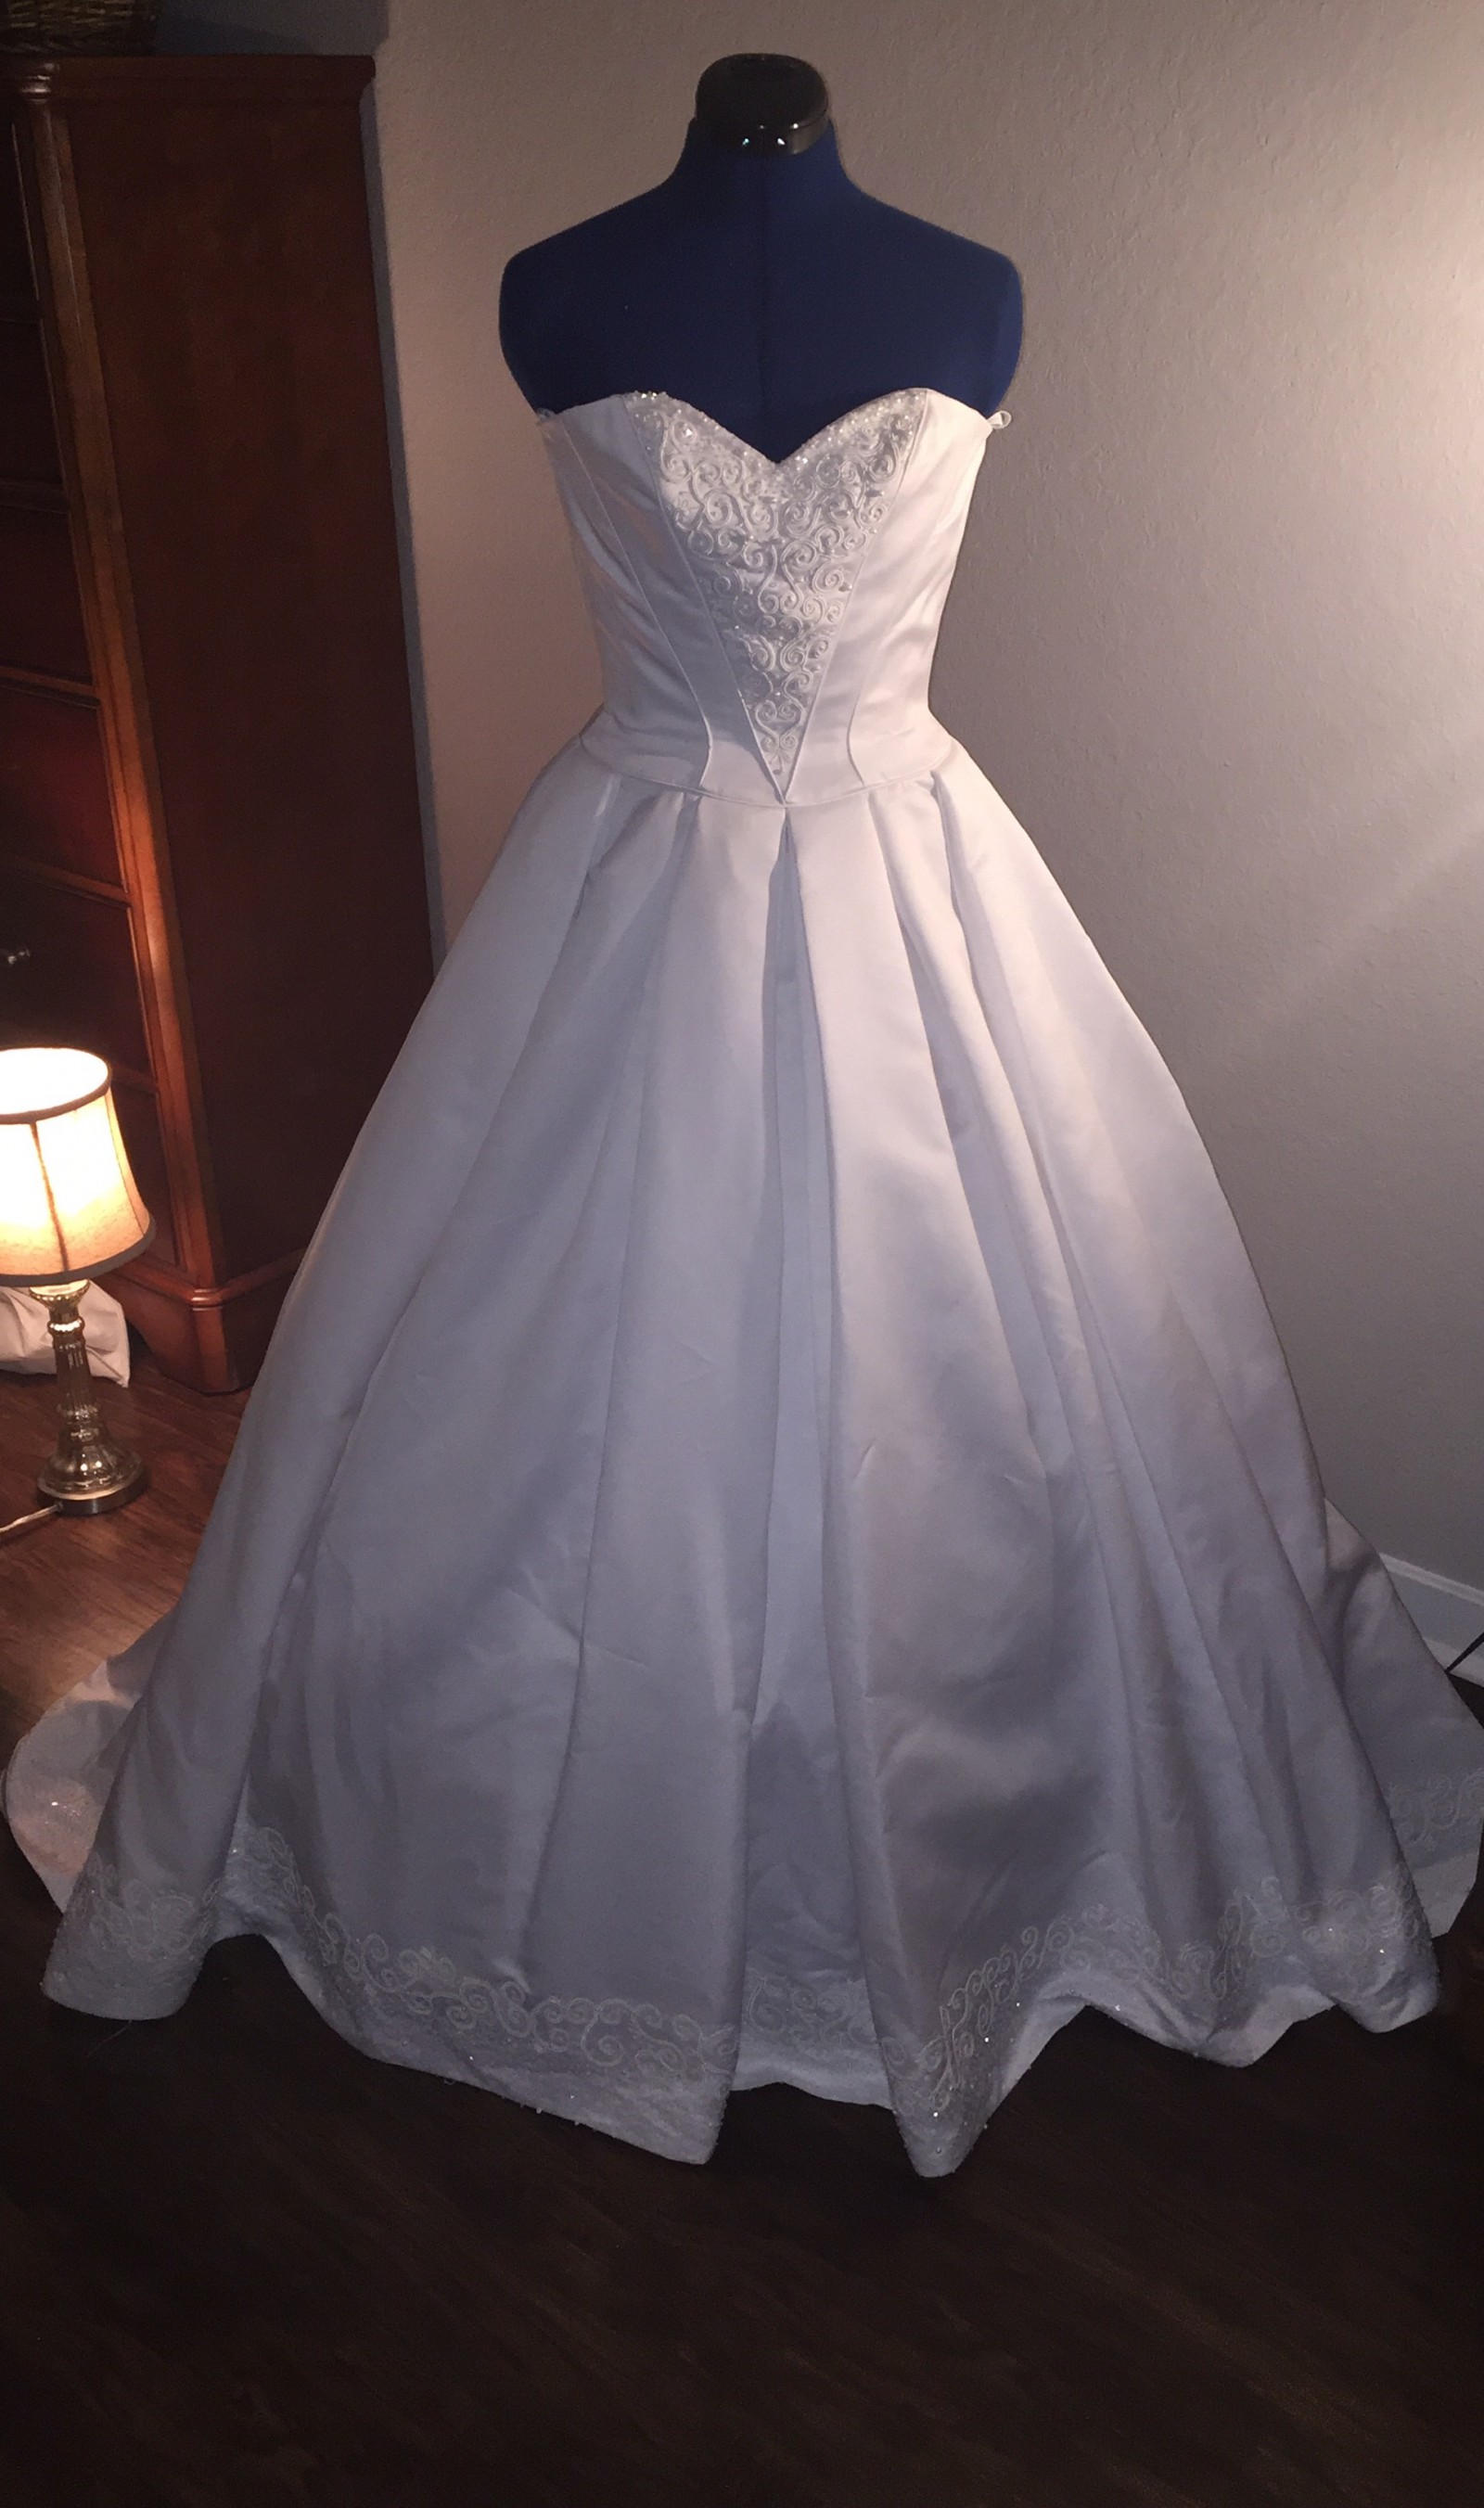 Rena Koh Style: 478 Preowned Wedding Dress Save 85% - Stillwhite